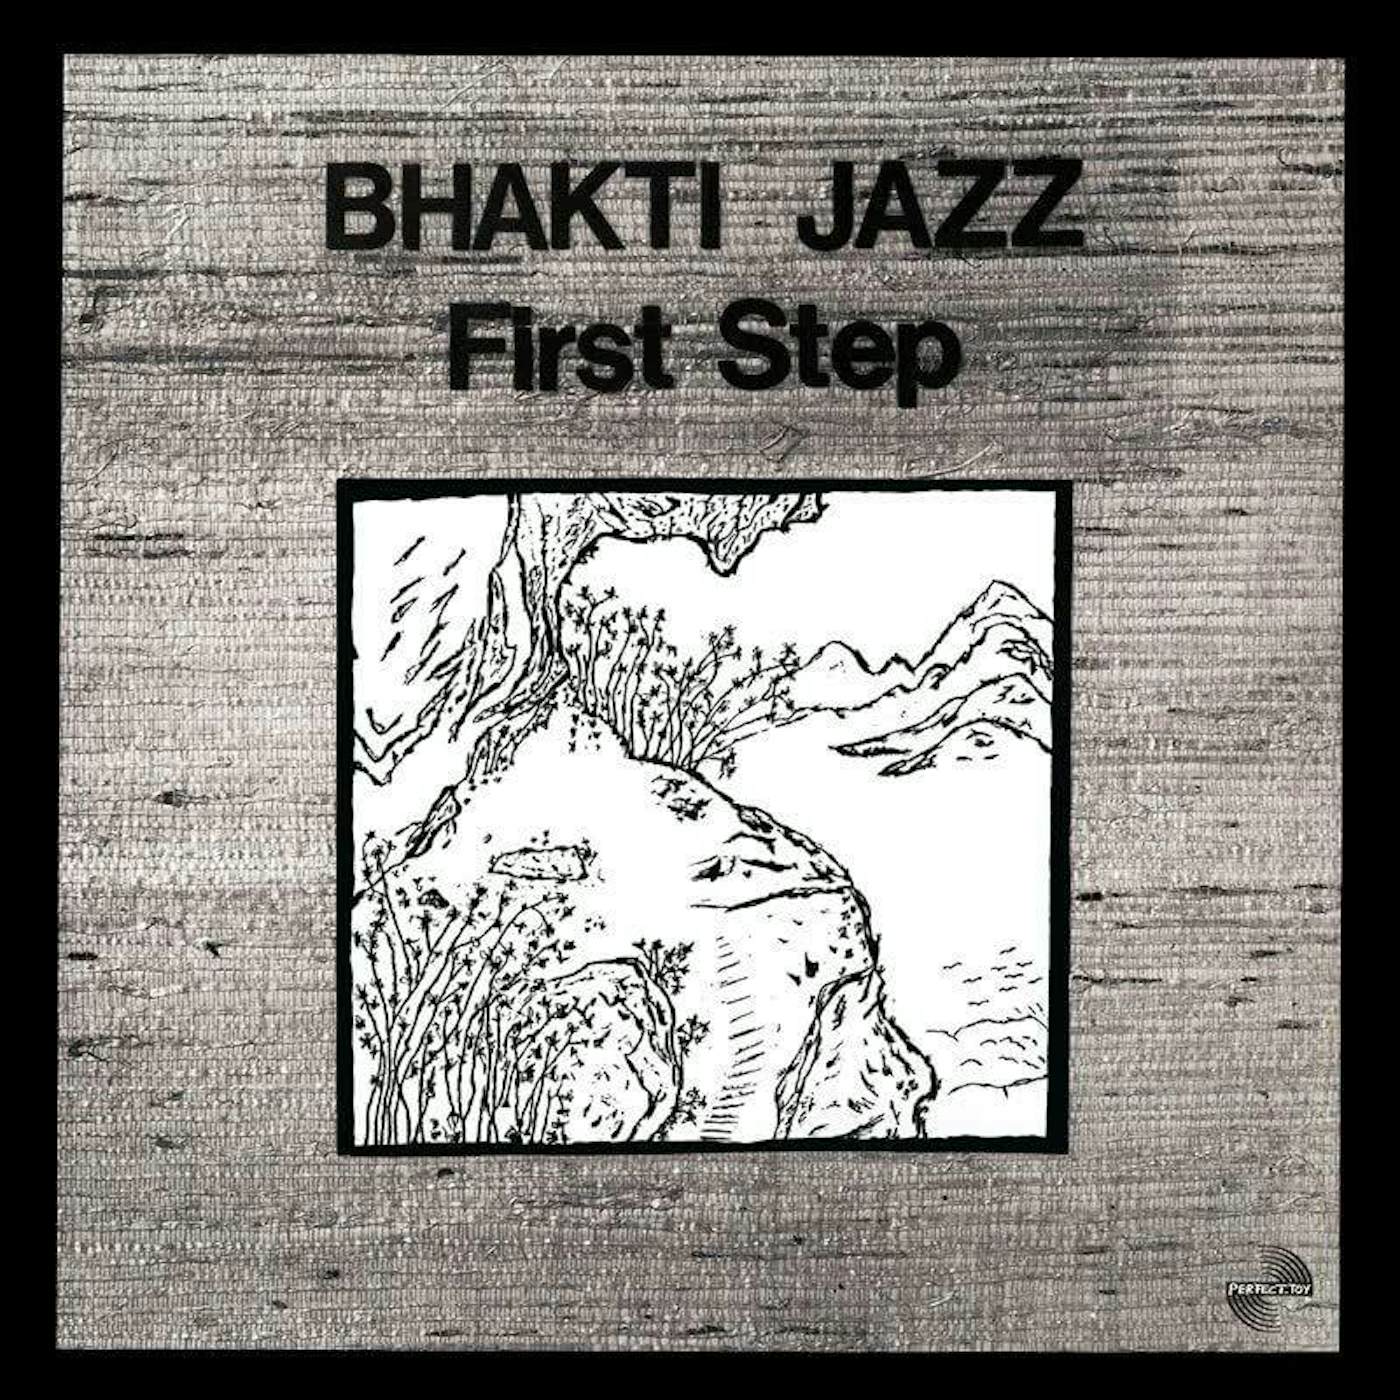 Bhakti Jazz First Steo (DL/Limited) Vinyl Record